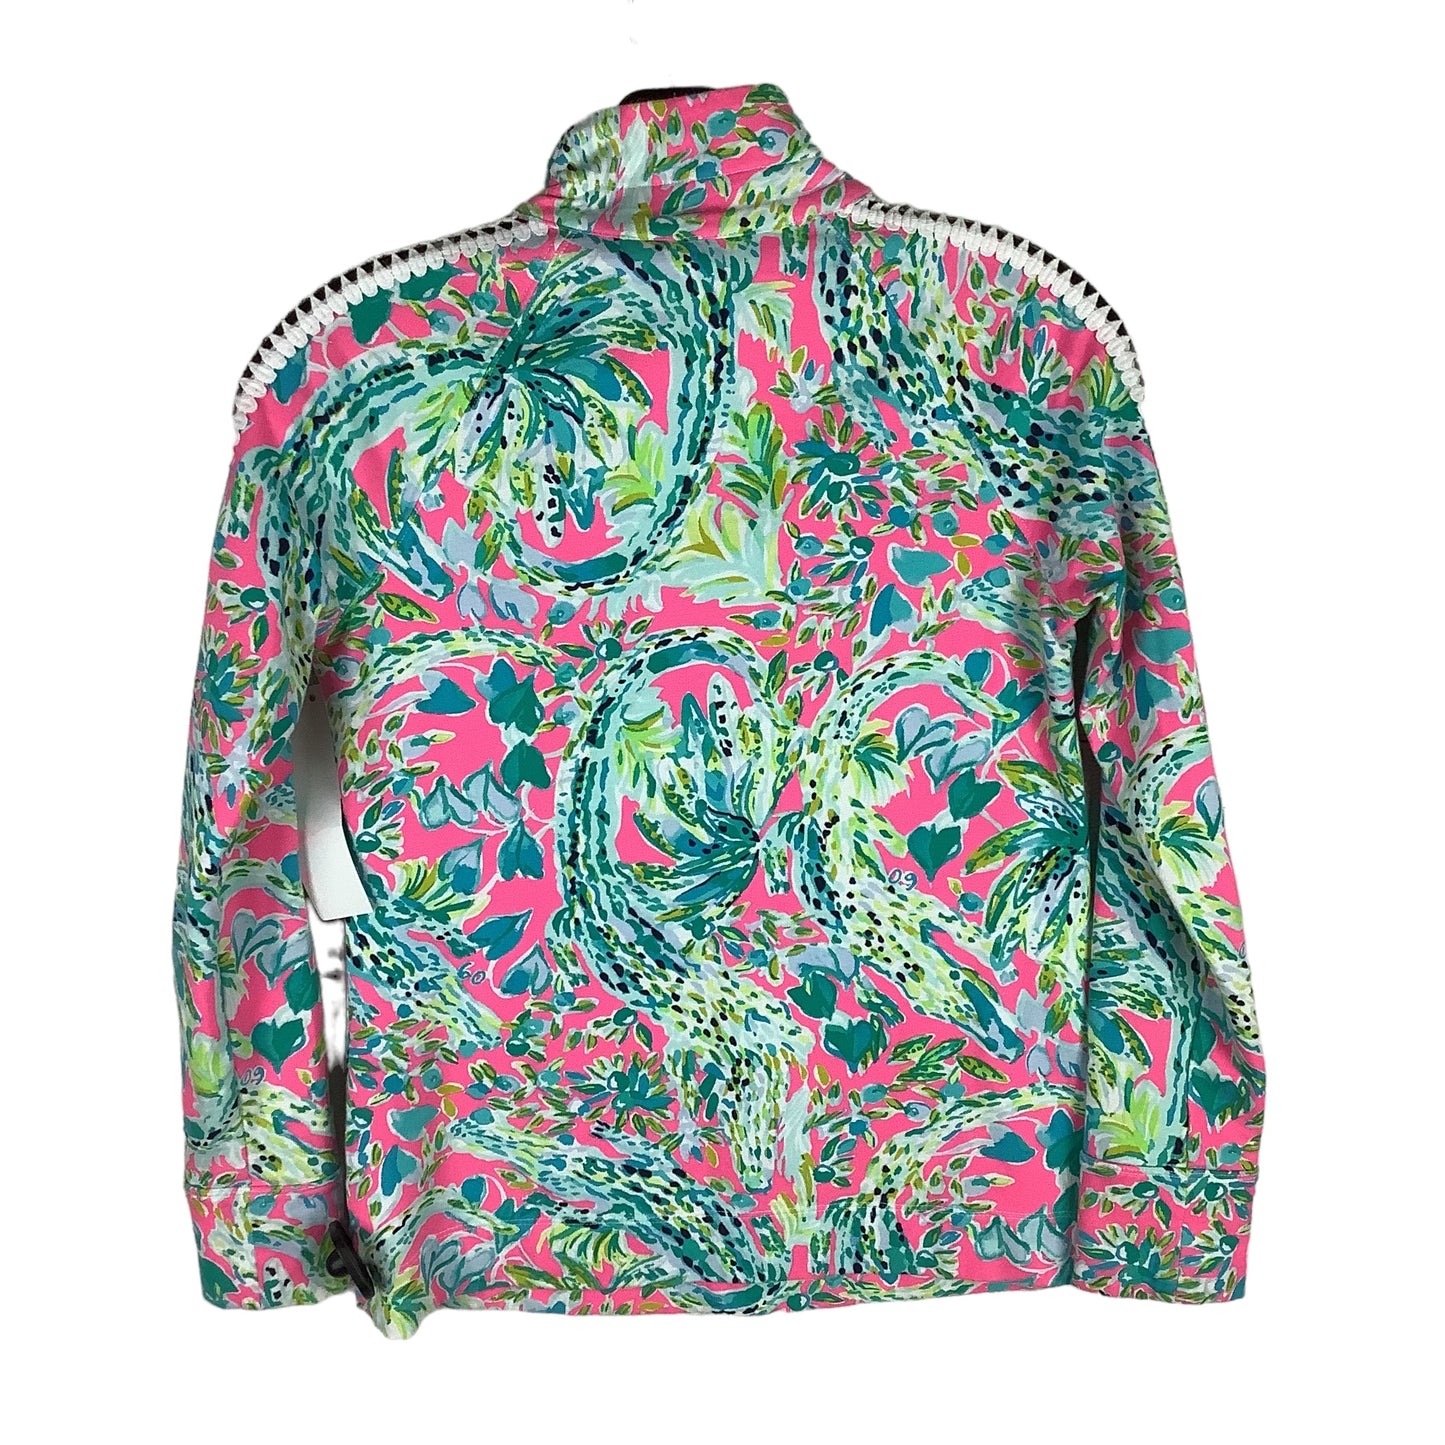 Jacket Designer By Lilly Pulitzer  Size: Xxs